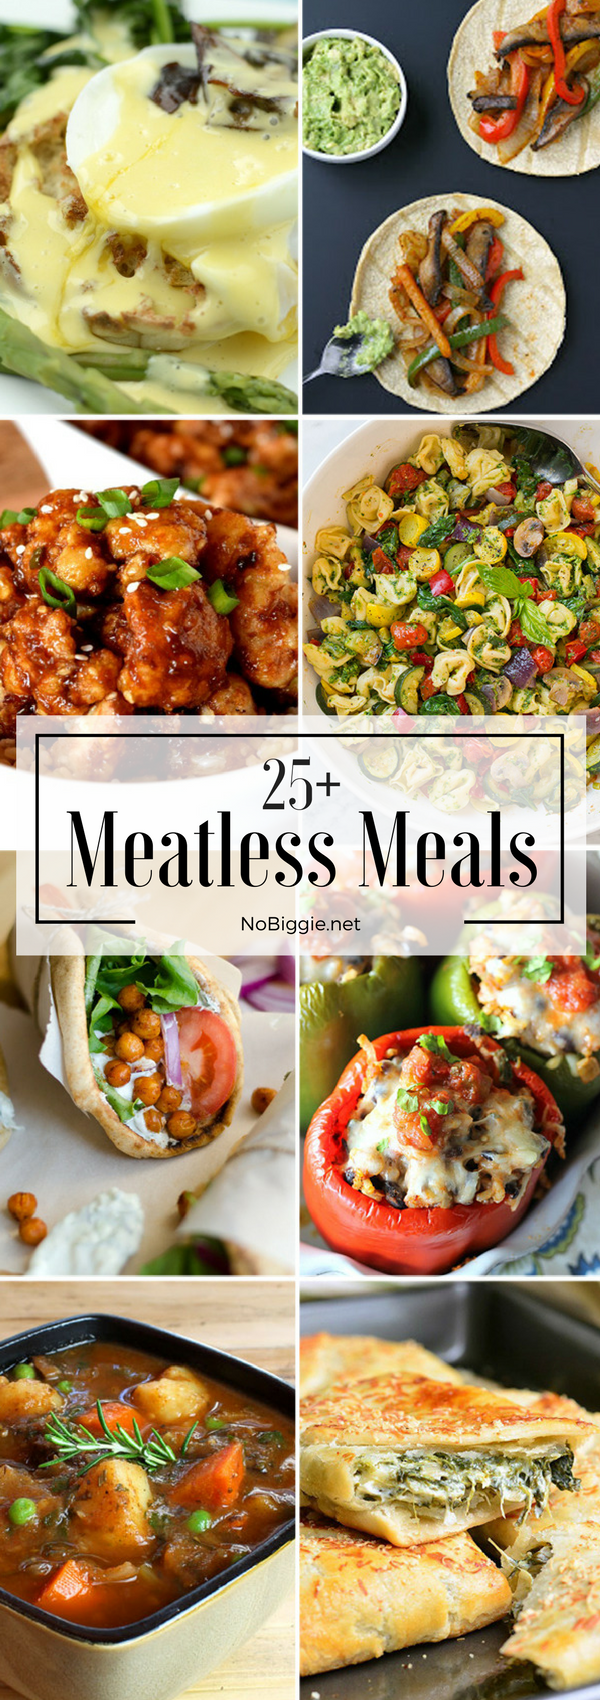 http://www.nobiggie.net/wp-content/uploads/2016/10/25-Meatless-Meals-NoBiggie.net-tll.png